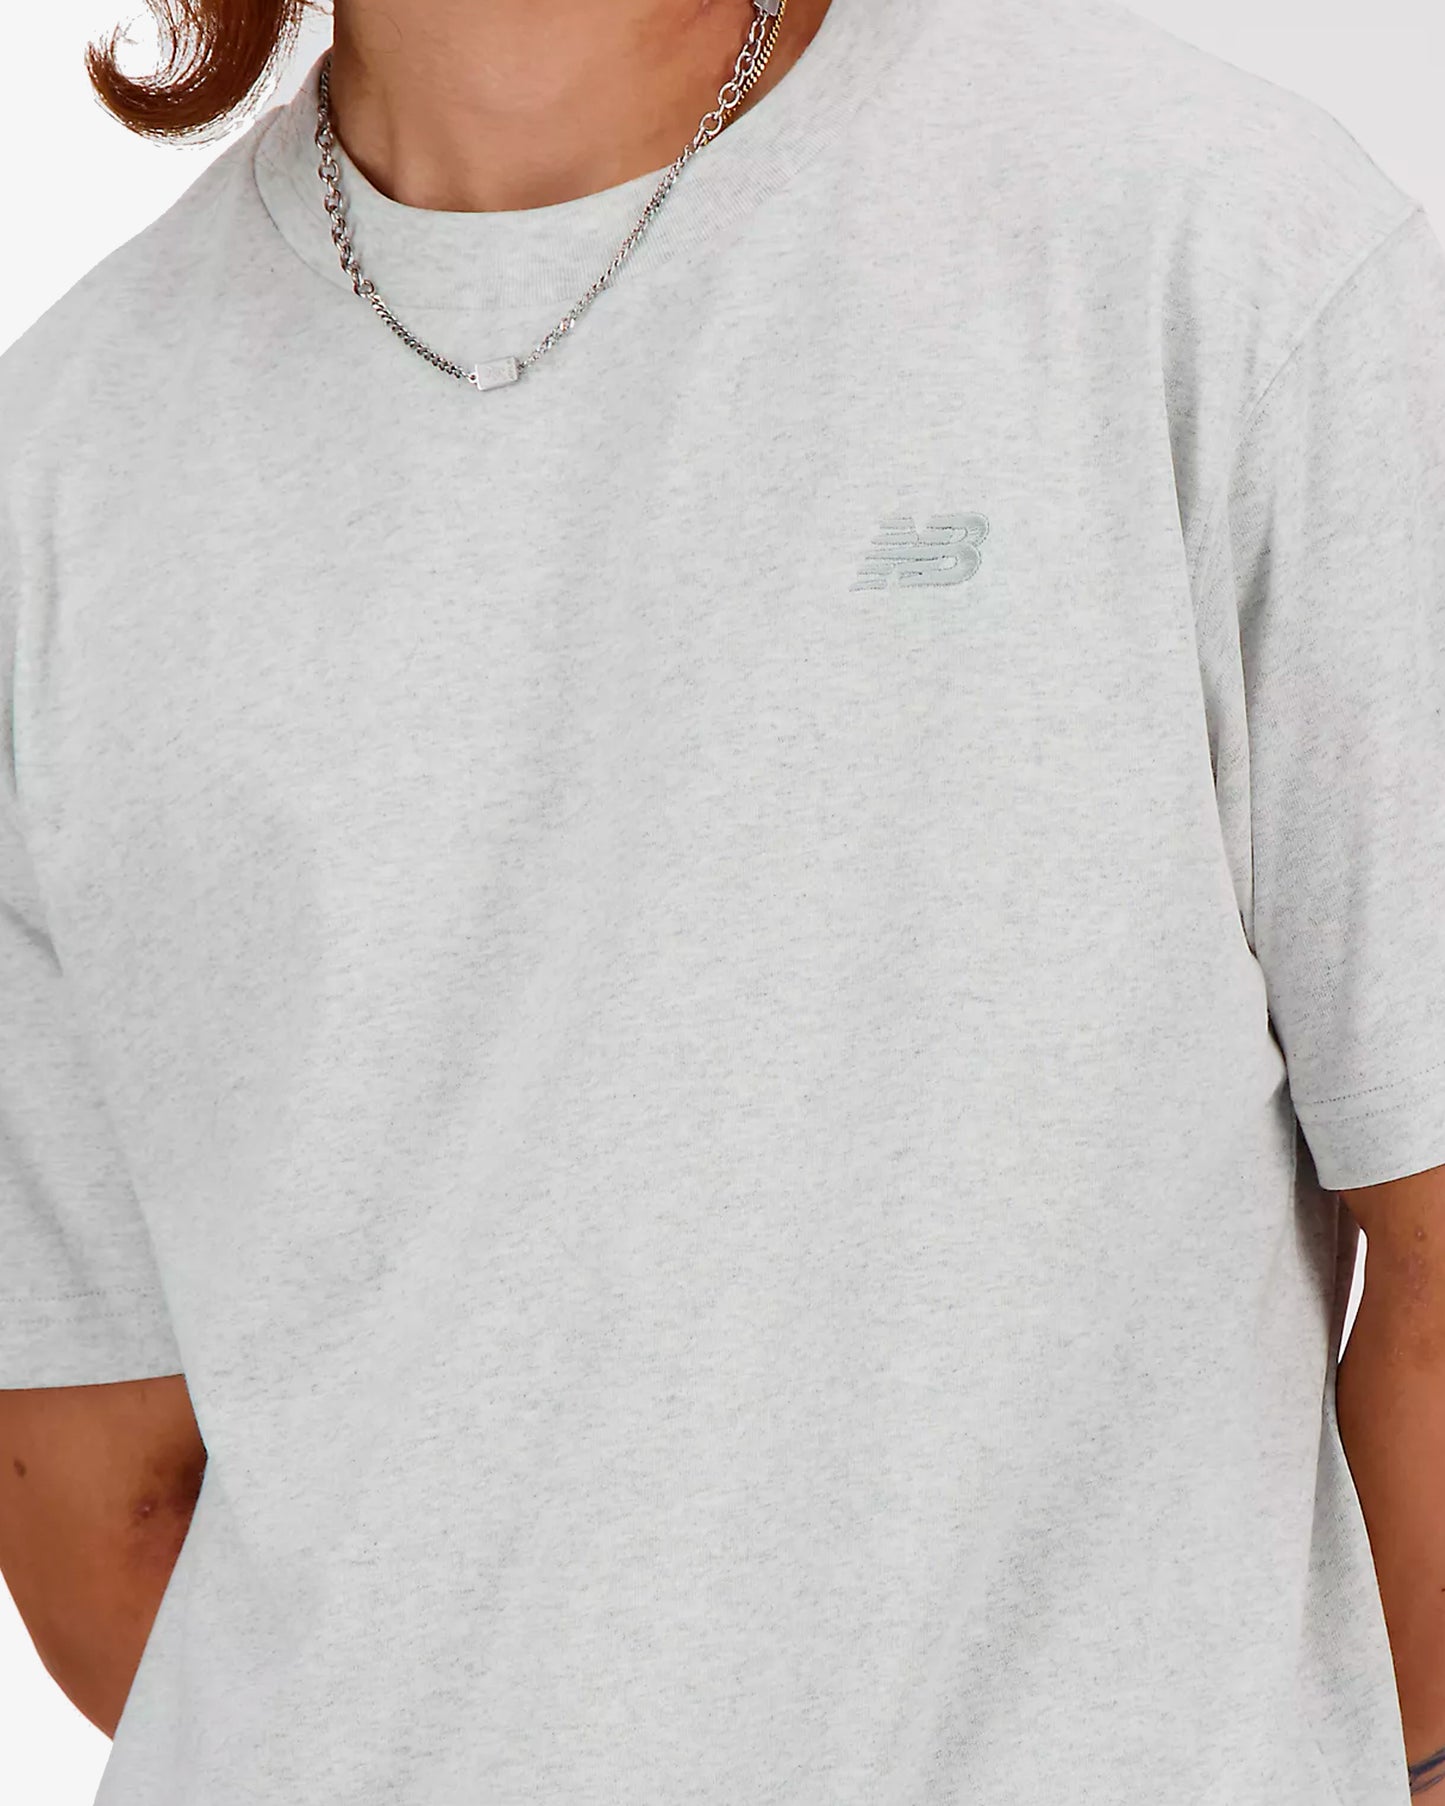 New Balance Athletics Cotton T-Shirt